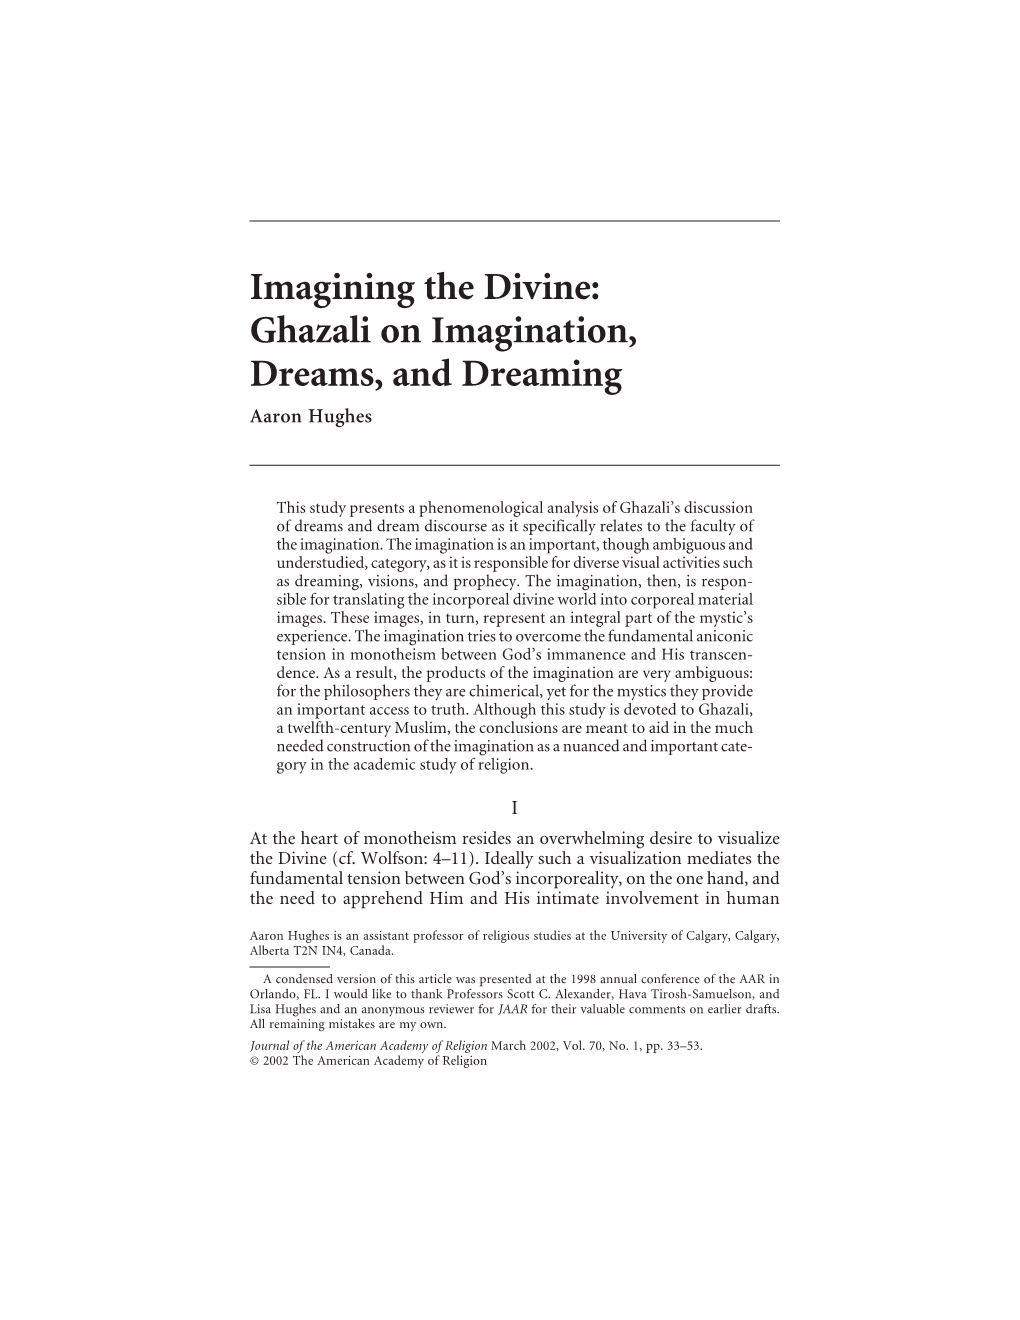 Ghazali on Imagination, Dreams, and Dreaming Aaron Hughes